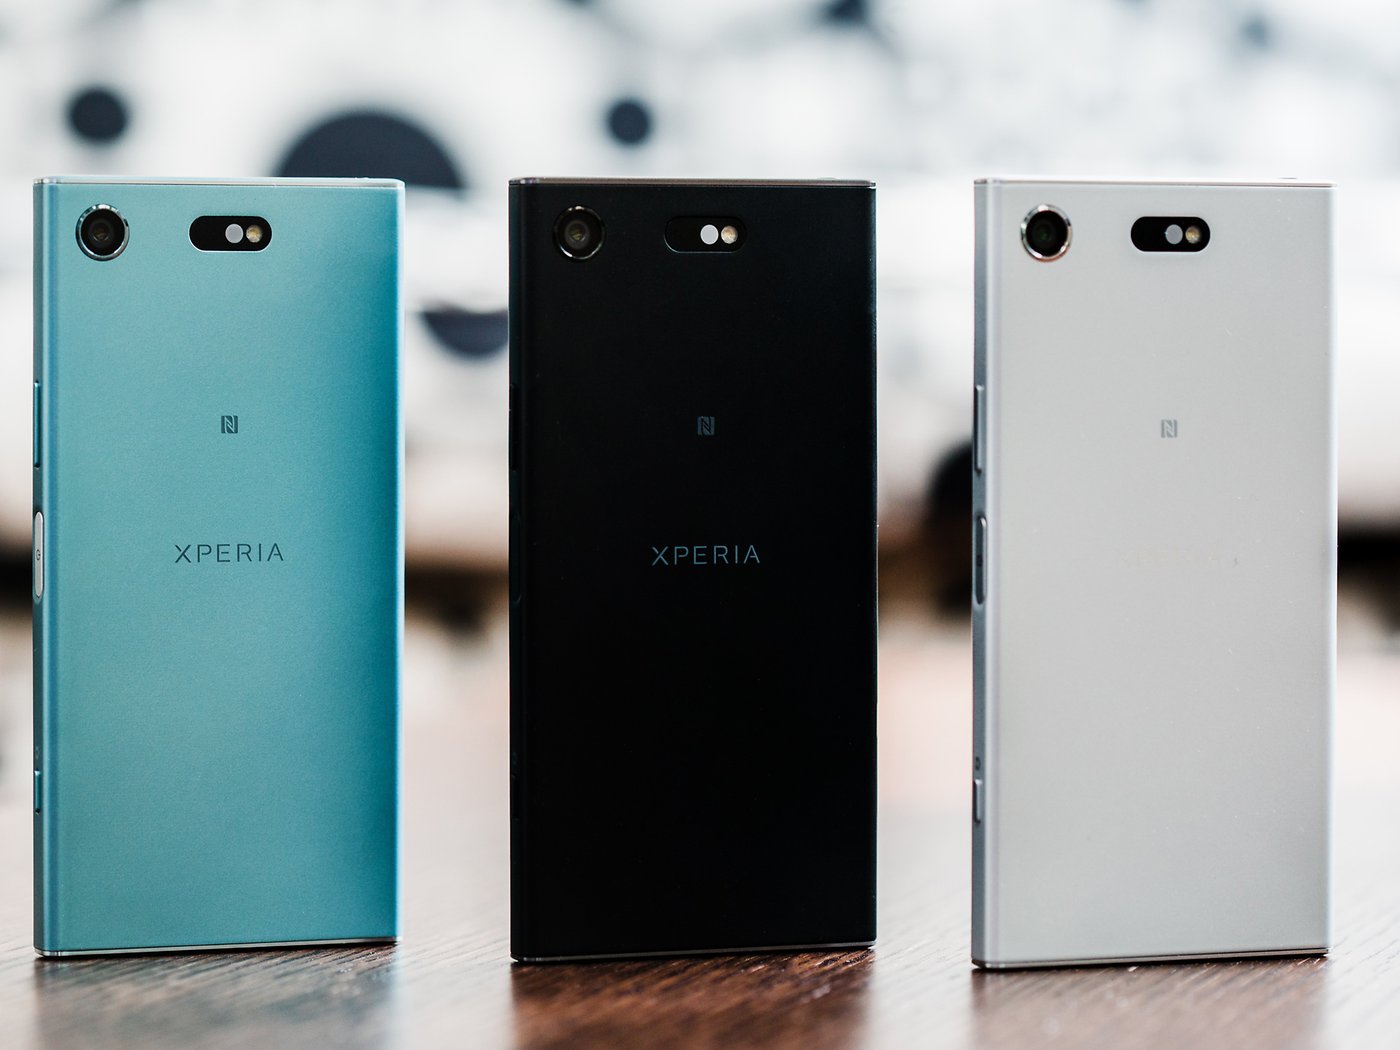 Test du téléphone Sony Xperia XZ1 - Touki Montréal